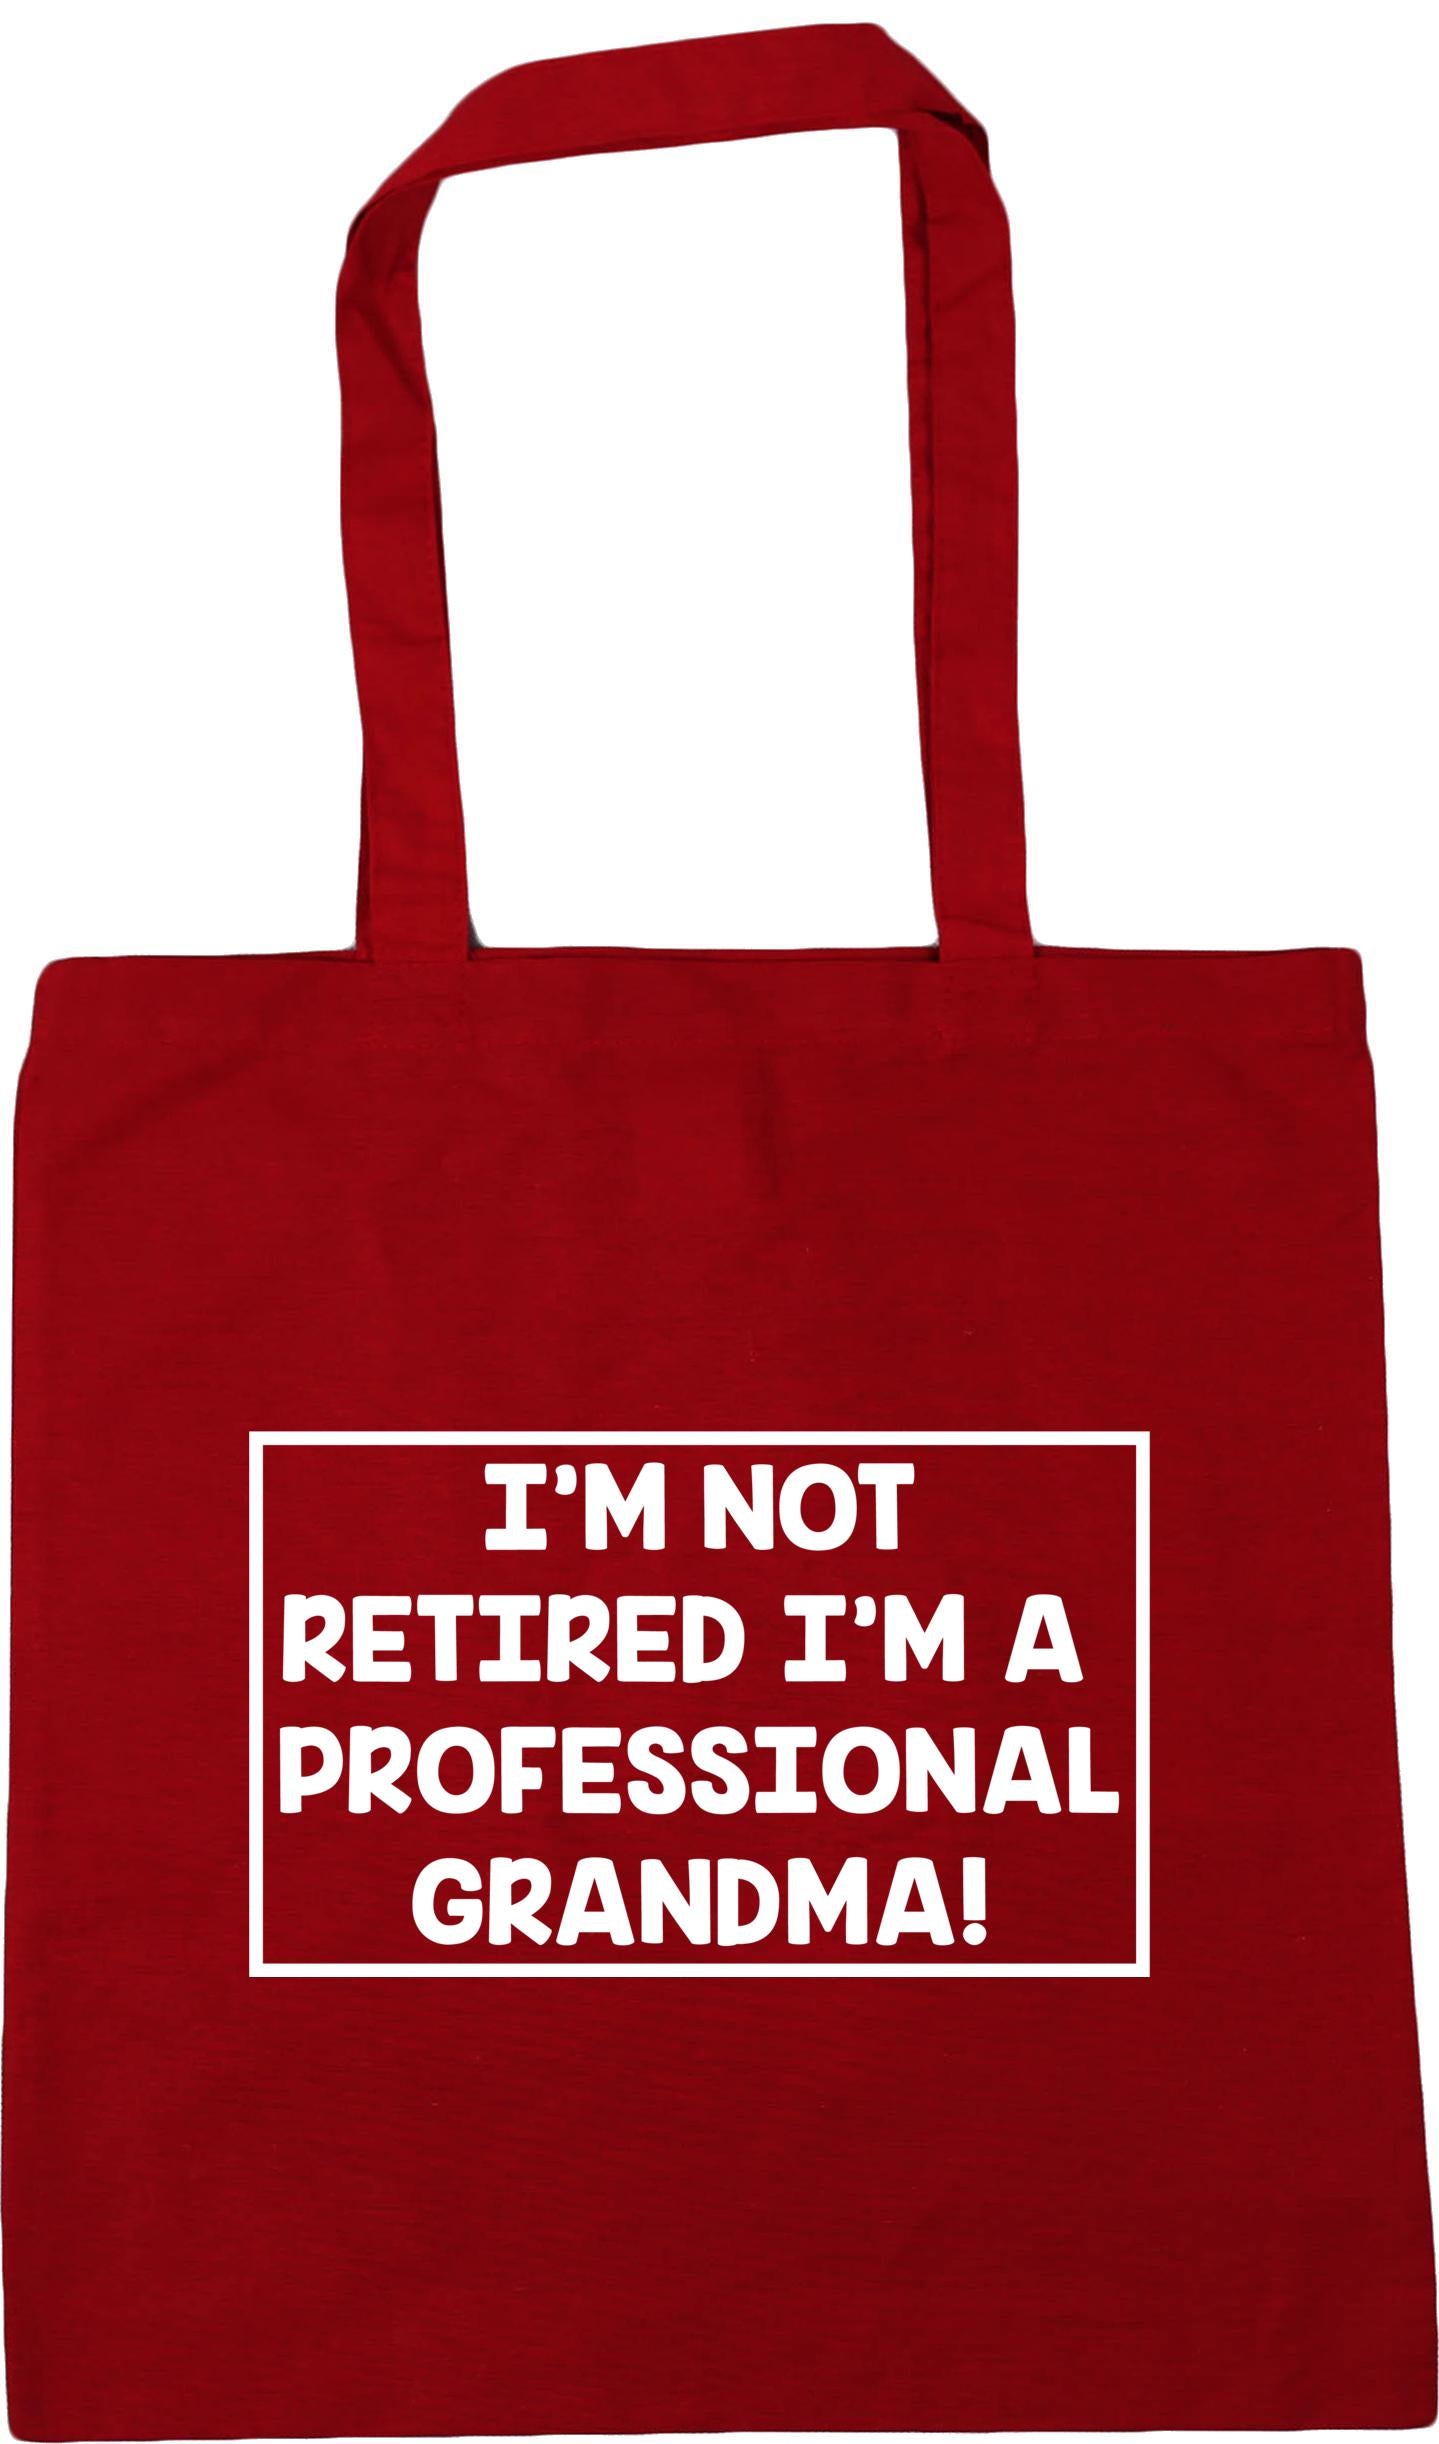 I'm not retired I'm a professional grandma Tote Bag